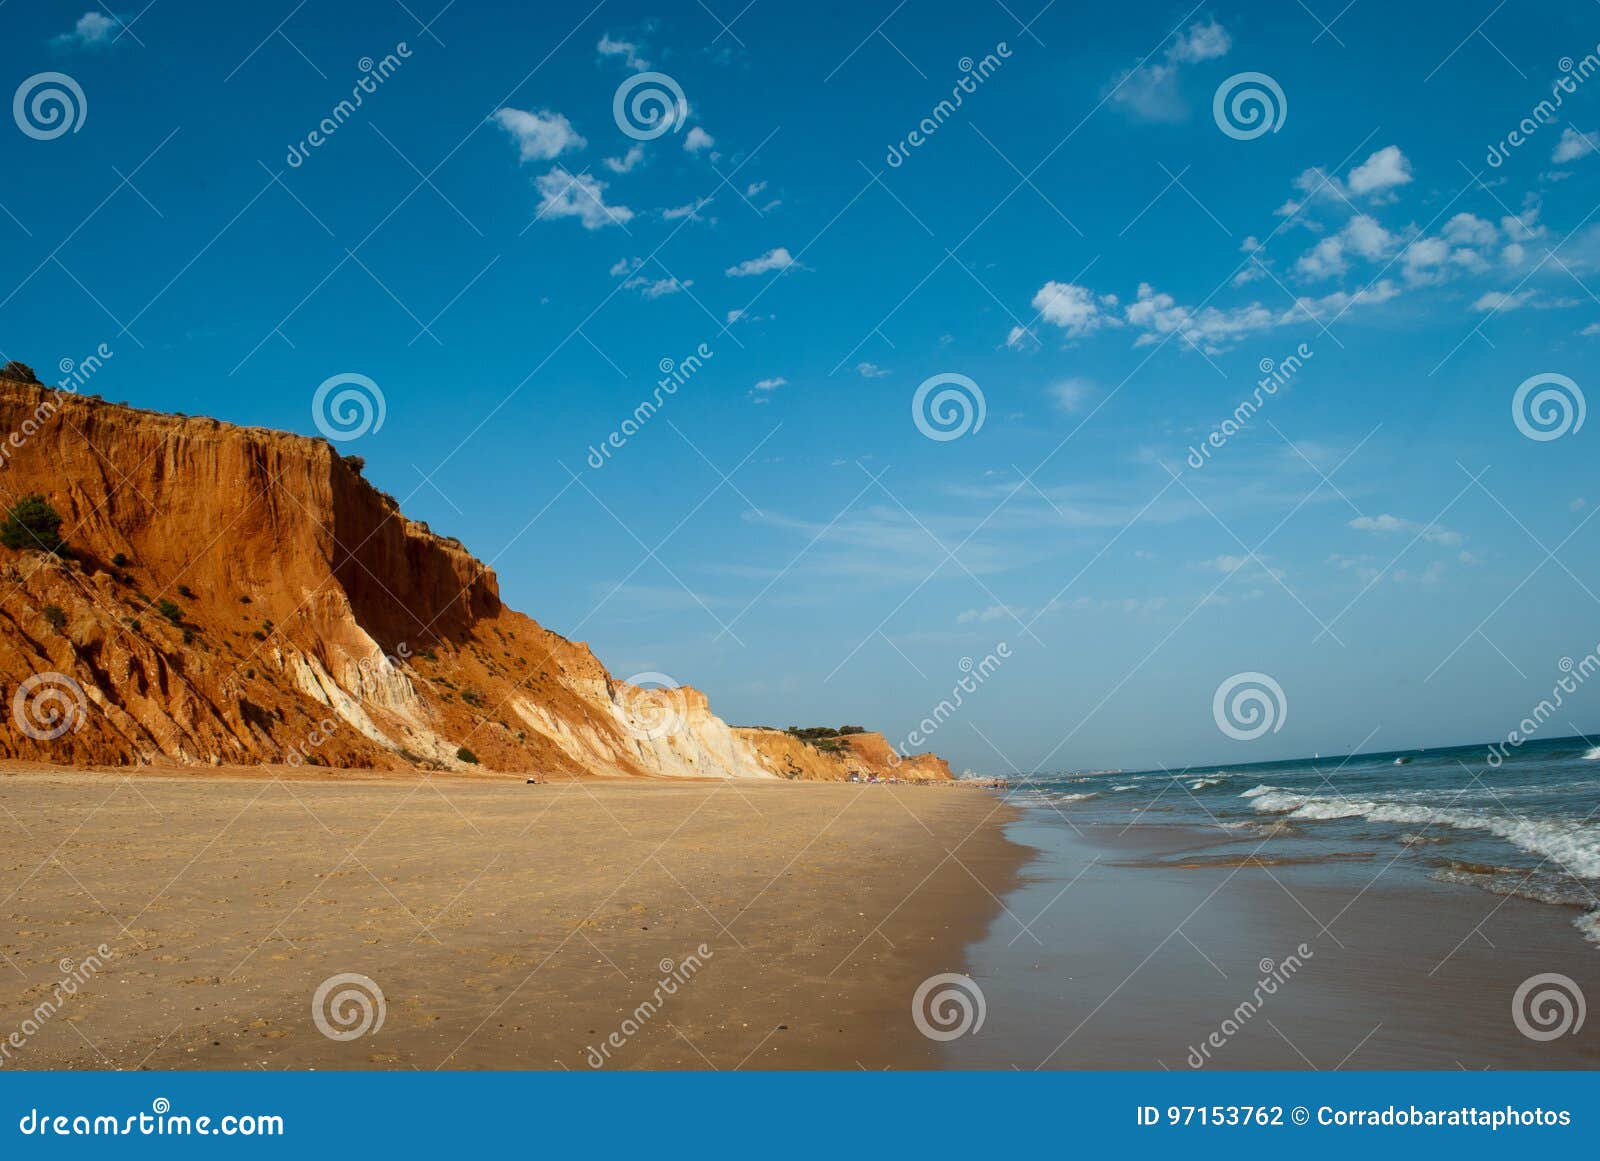 beautiful coasts and dunes on the atlantic ocean